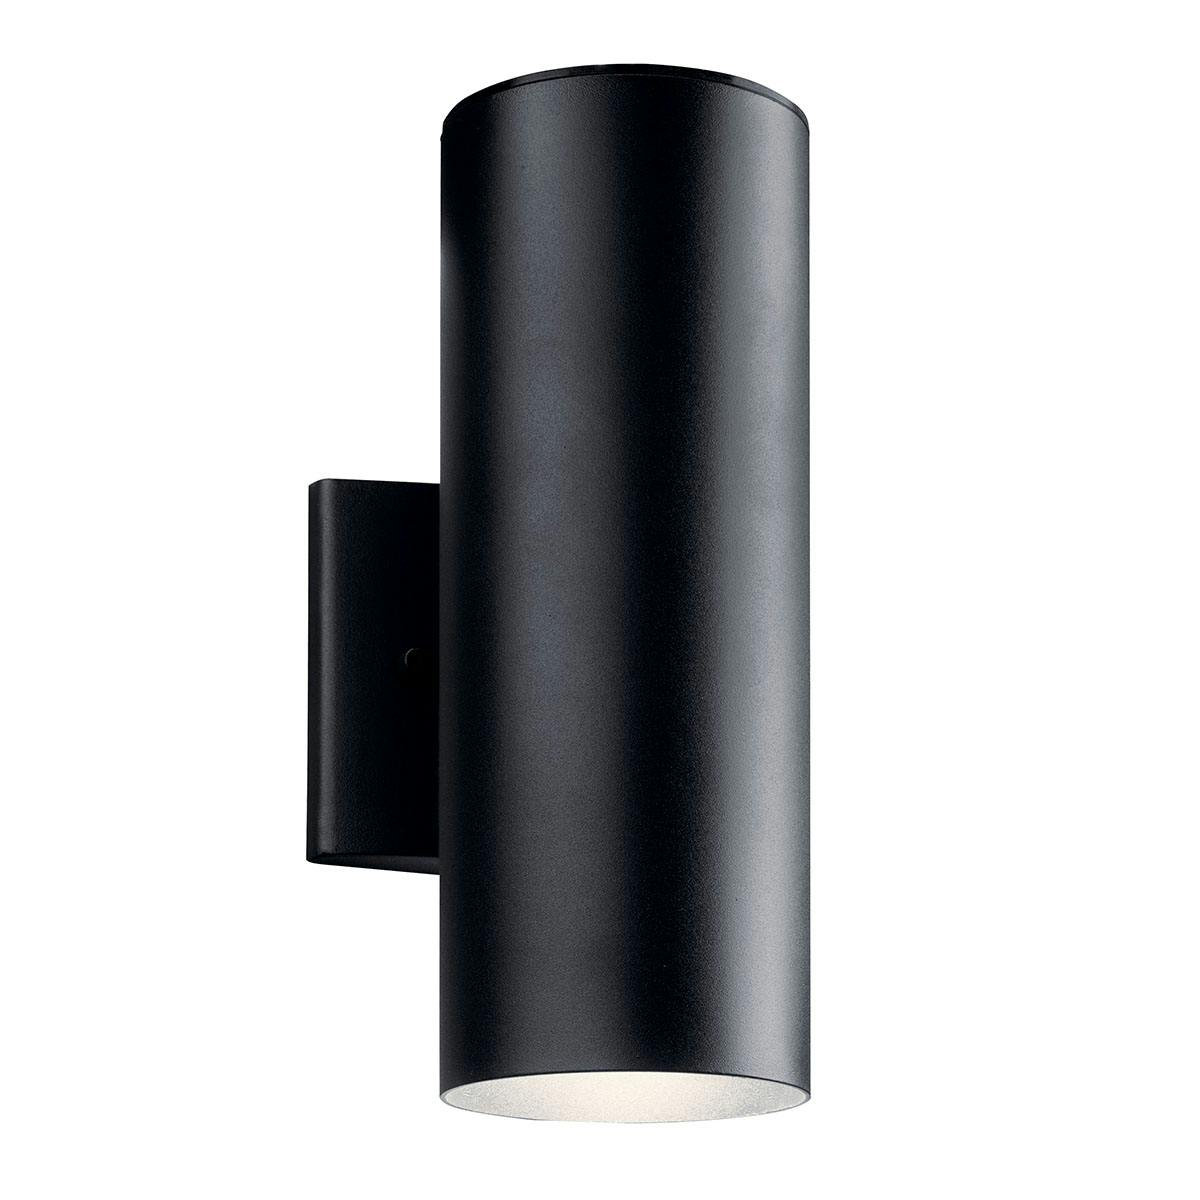 Cylinder 3000K LED 12" Wall Light Black on a white background